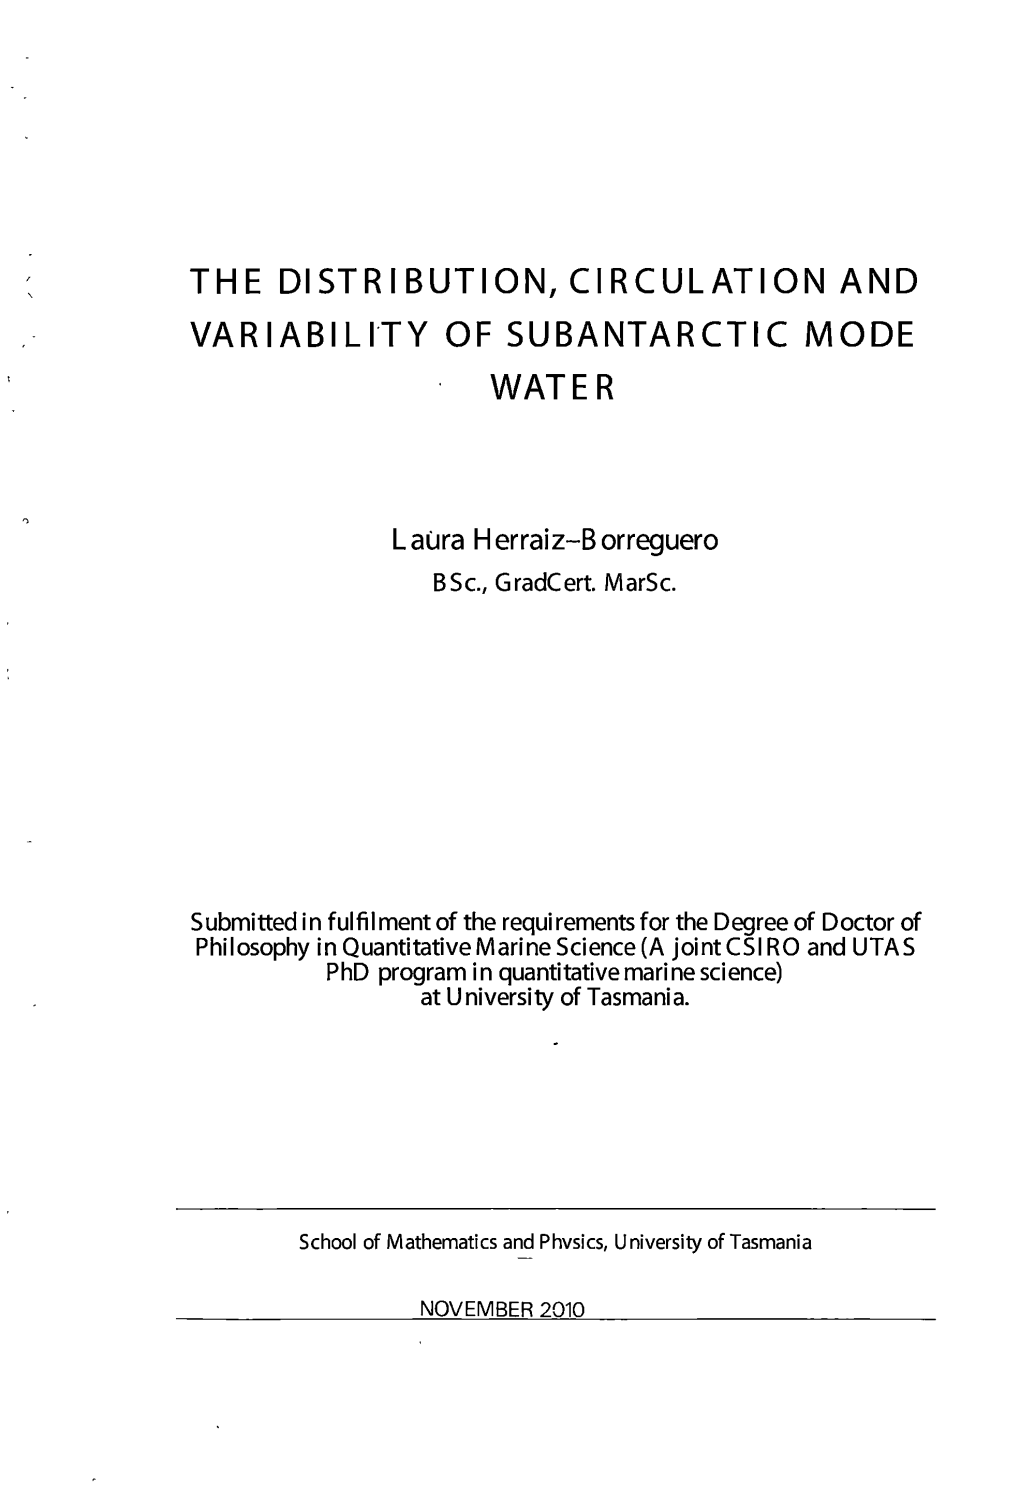 The Distribution, Circulation and Variability of Subantarctic Mode Water